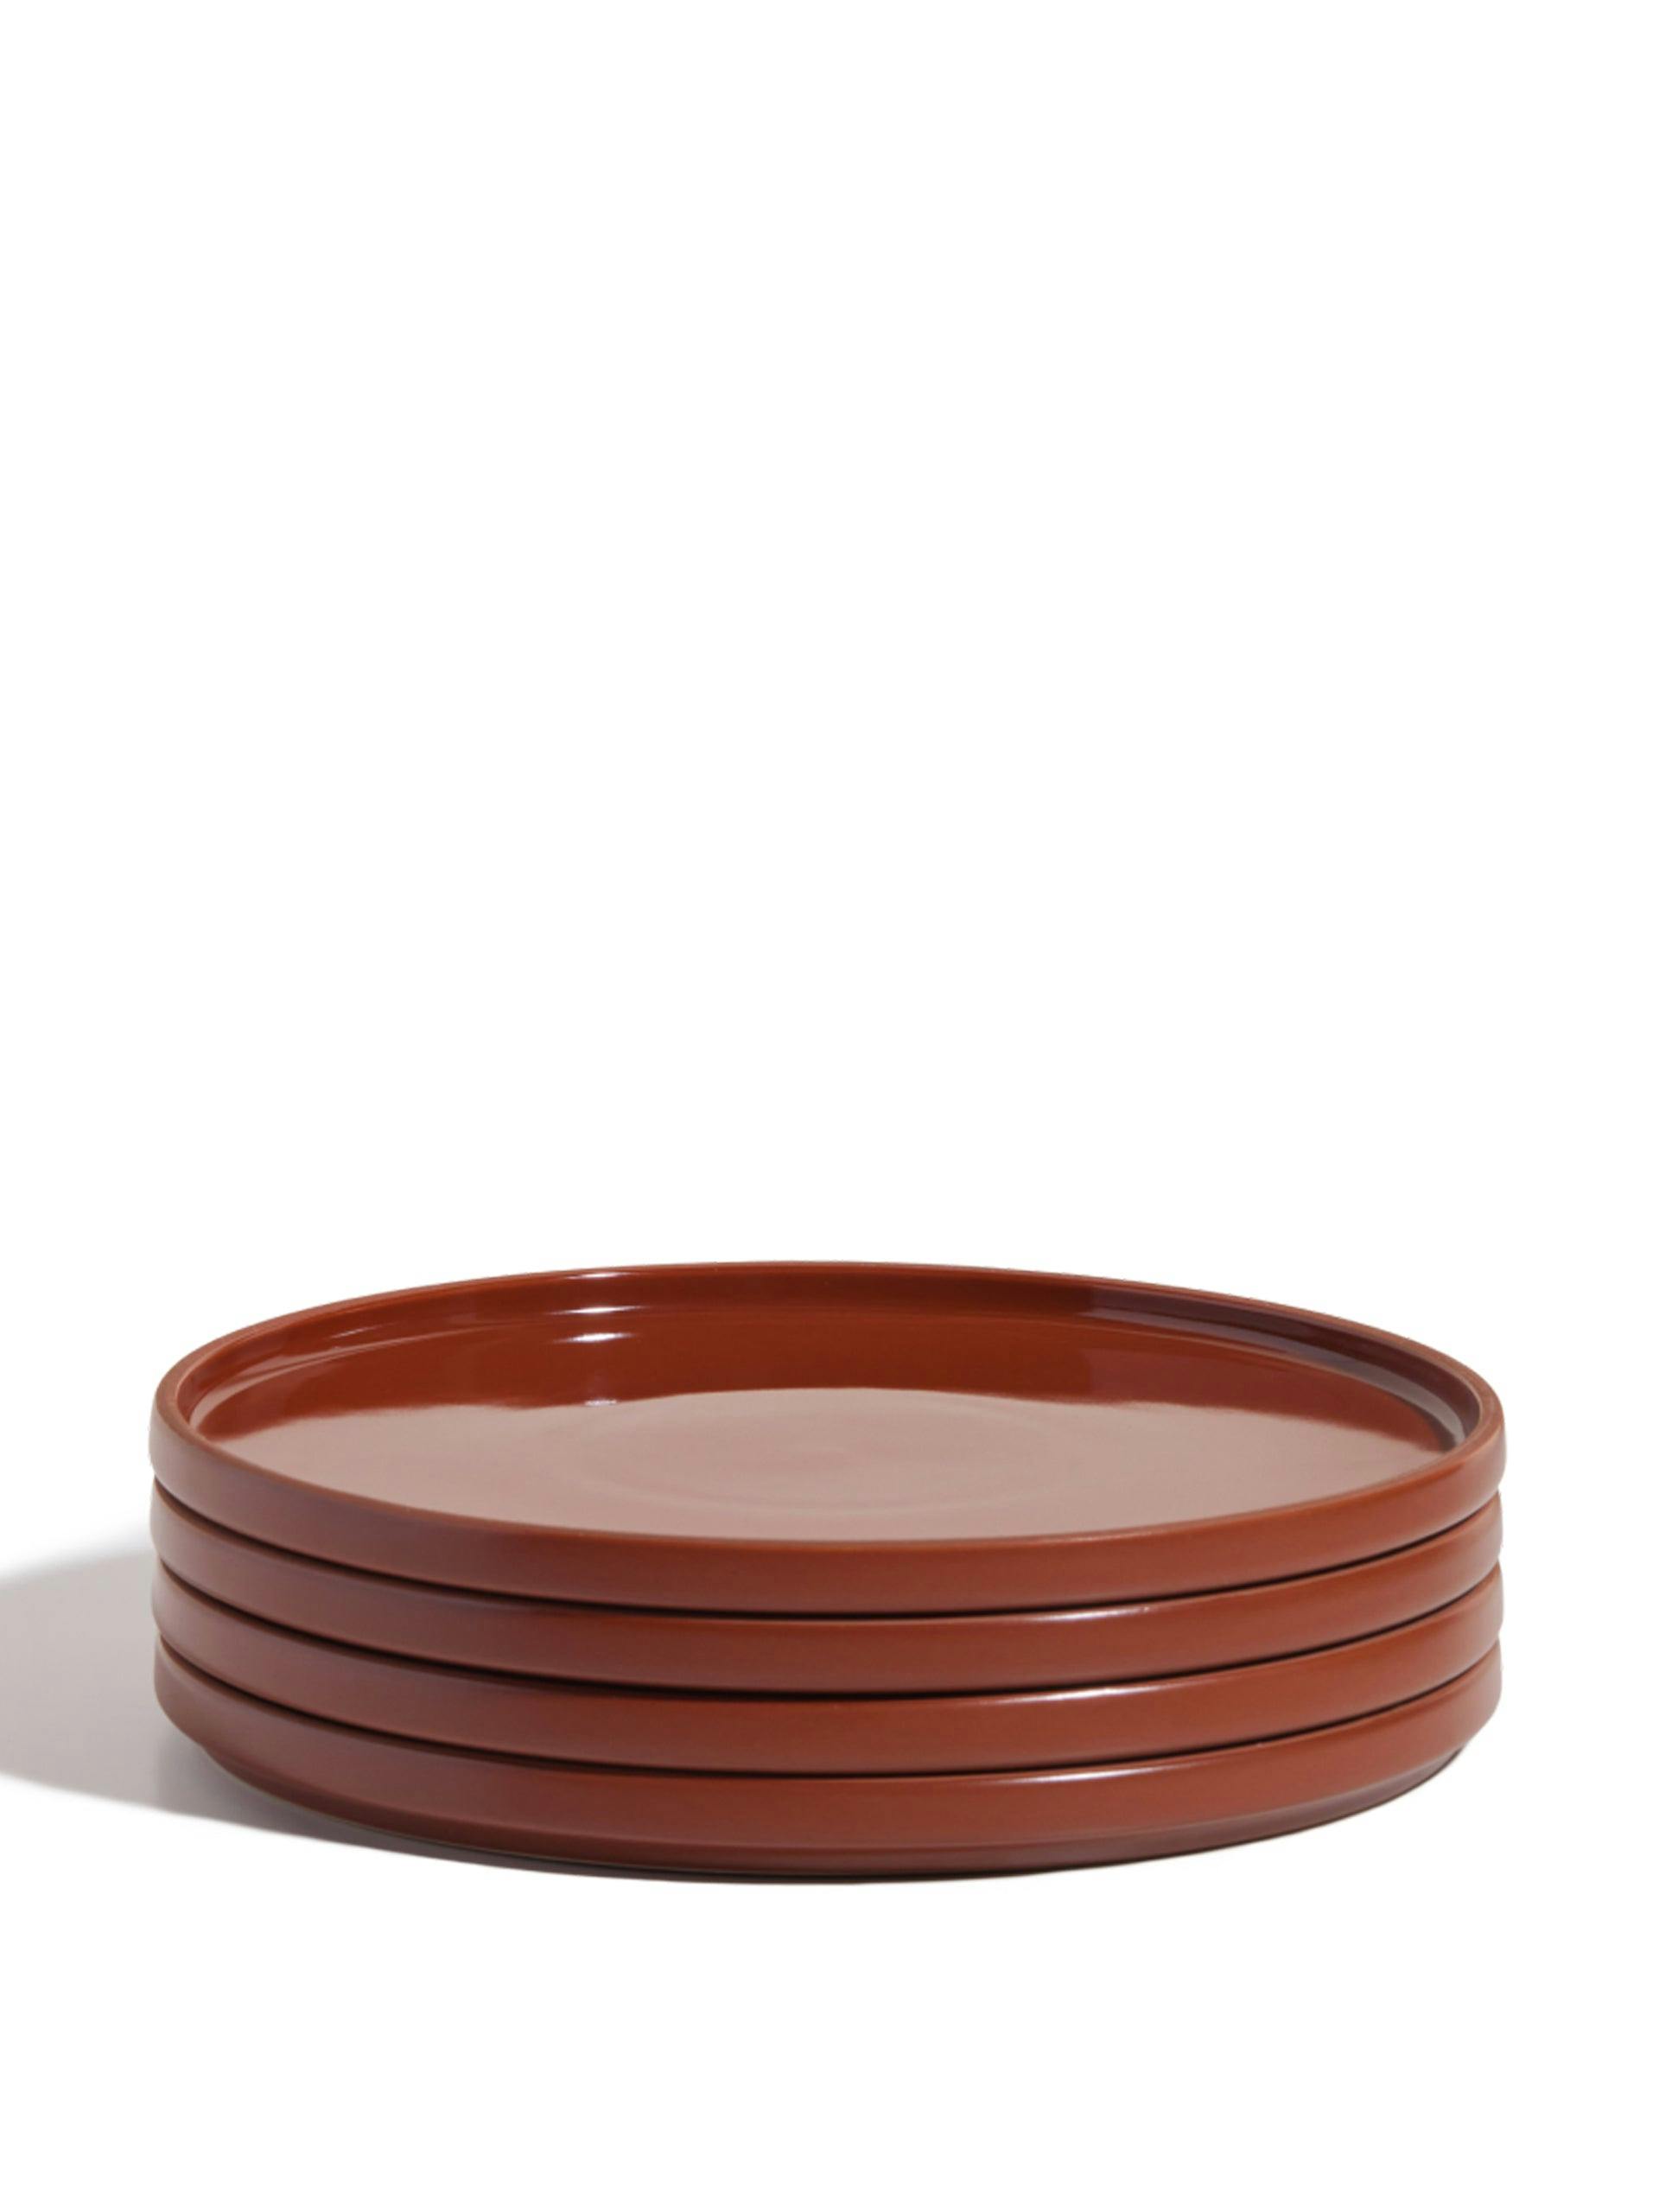 Terracotta plates (set of 4)